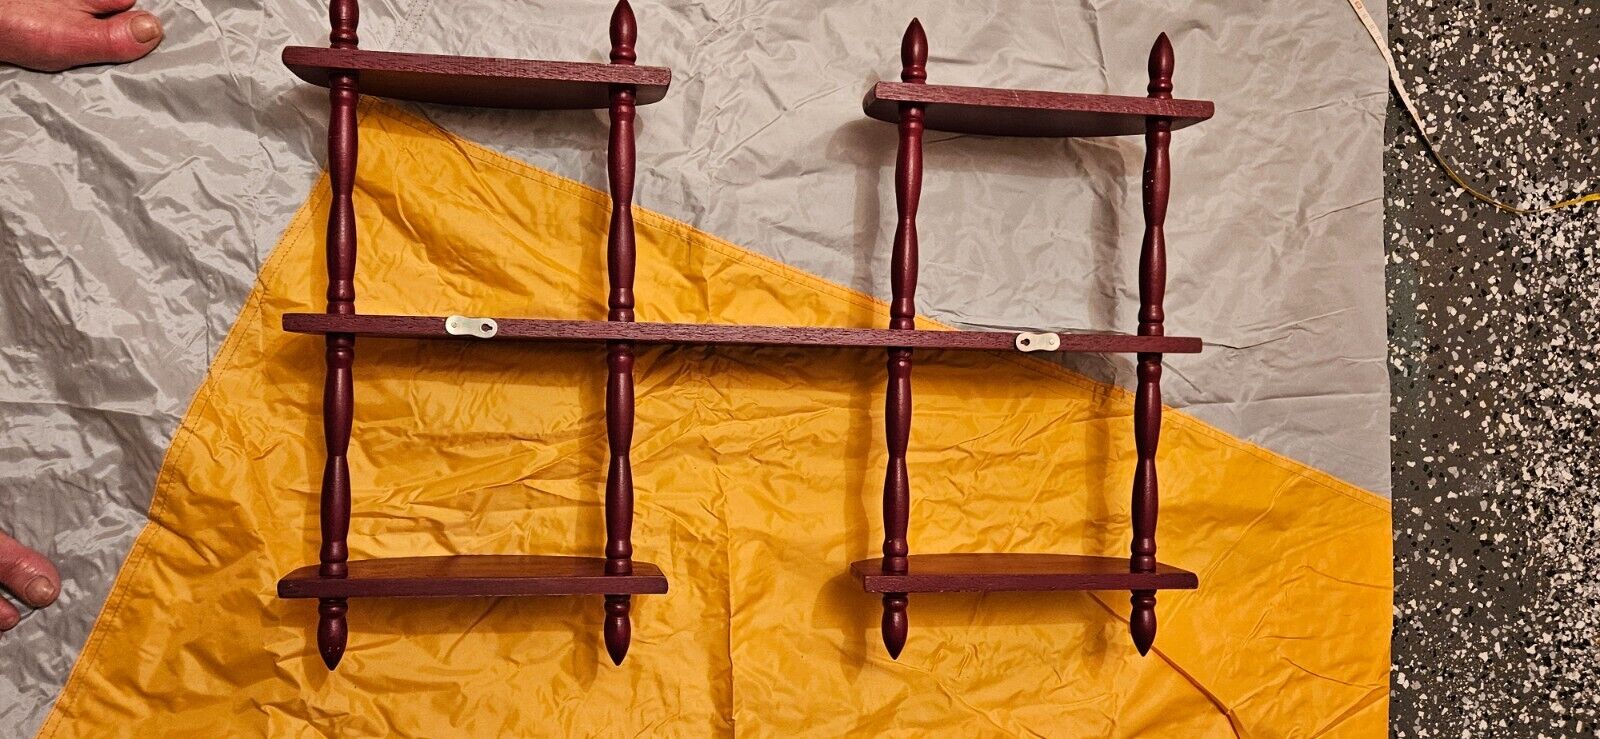 VTG Retro Wooden Hanging 4 Tier Wall Spindle Nick Knack Curio Collectors Shelves